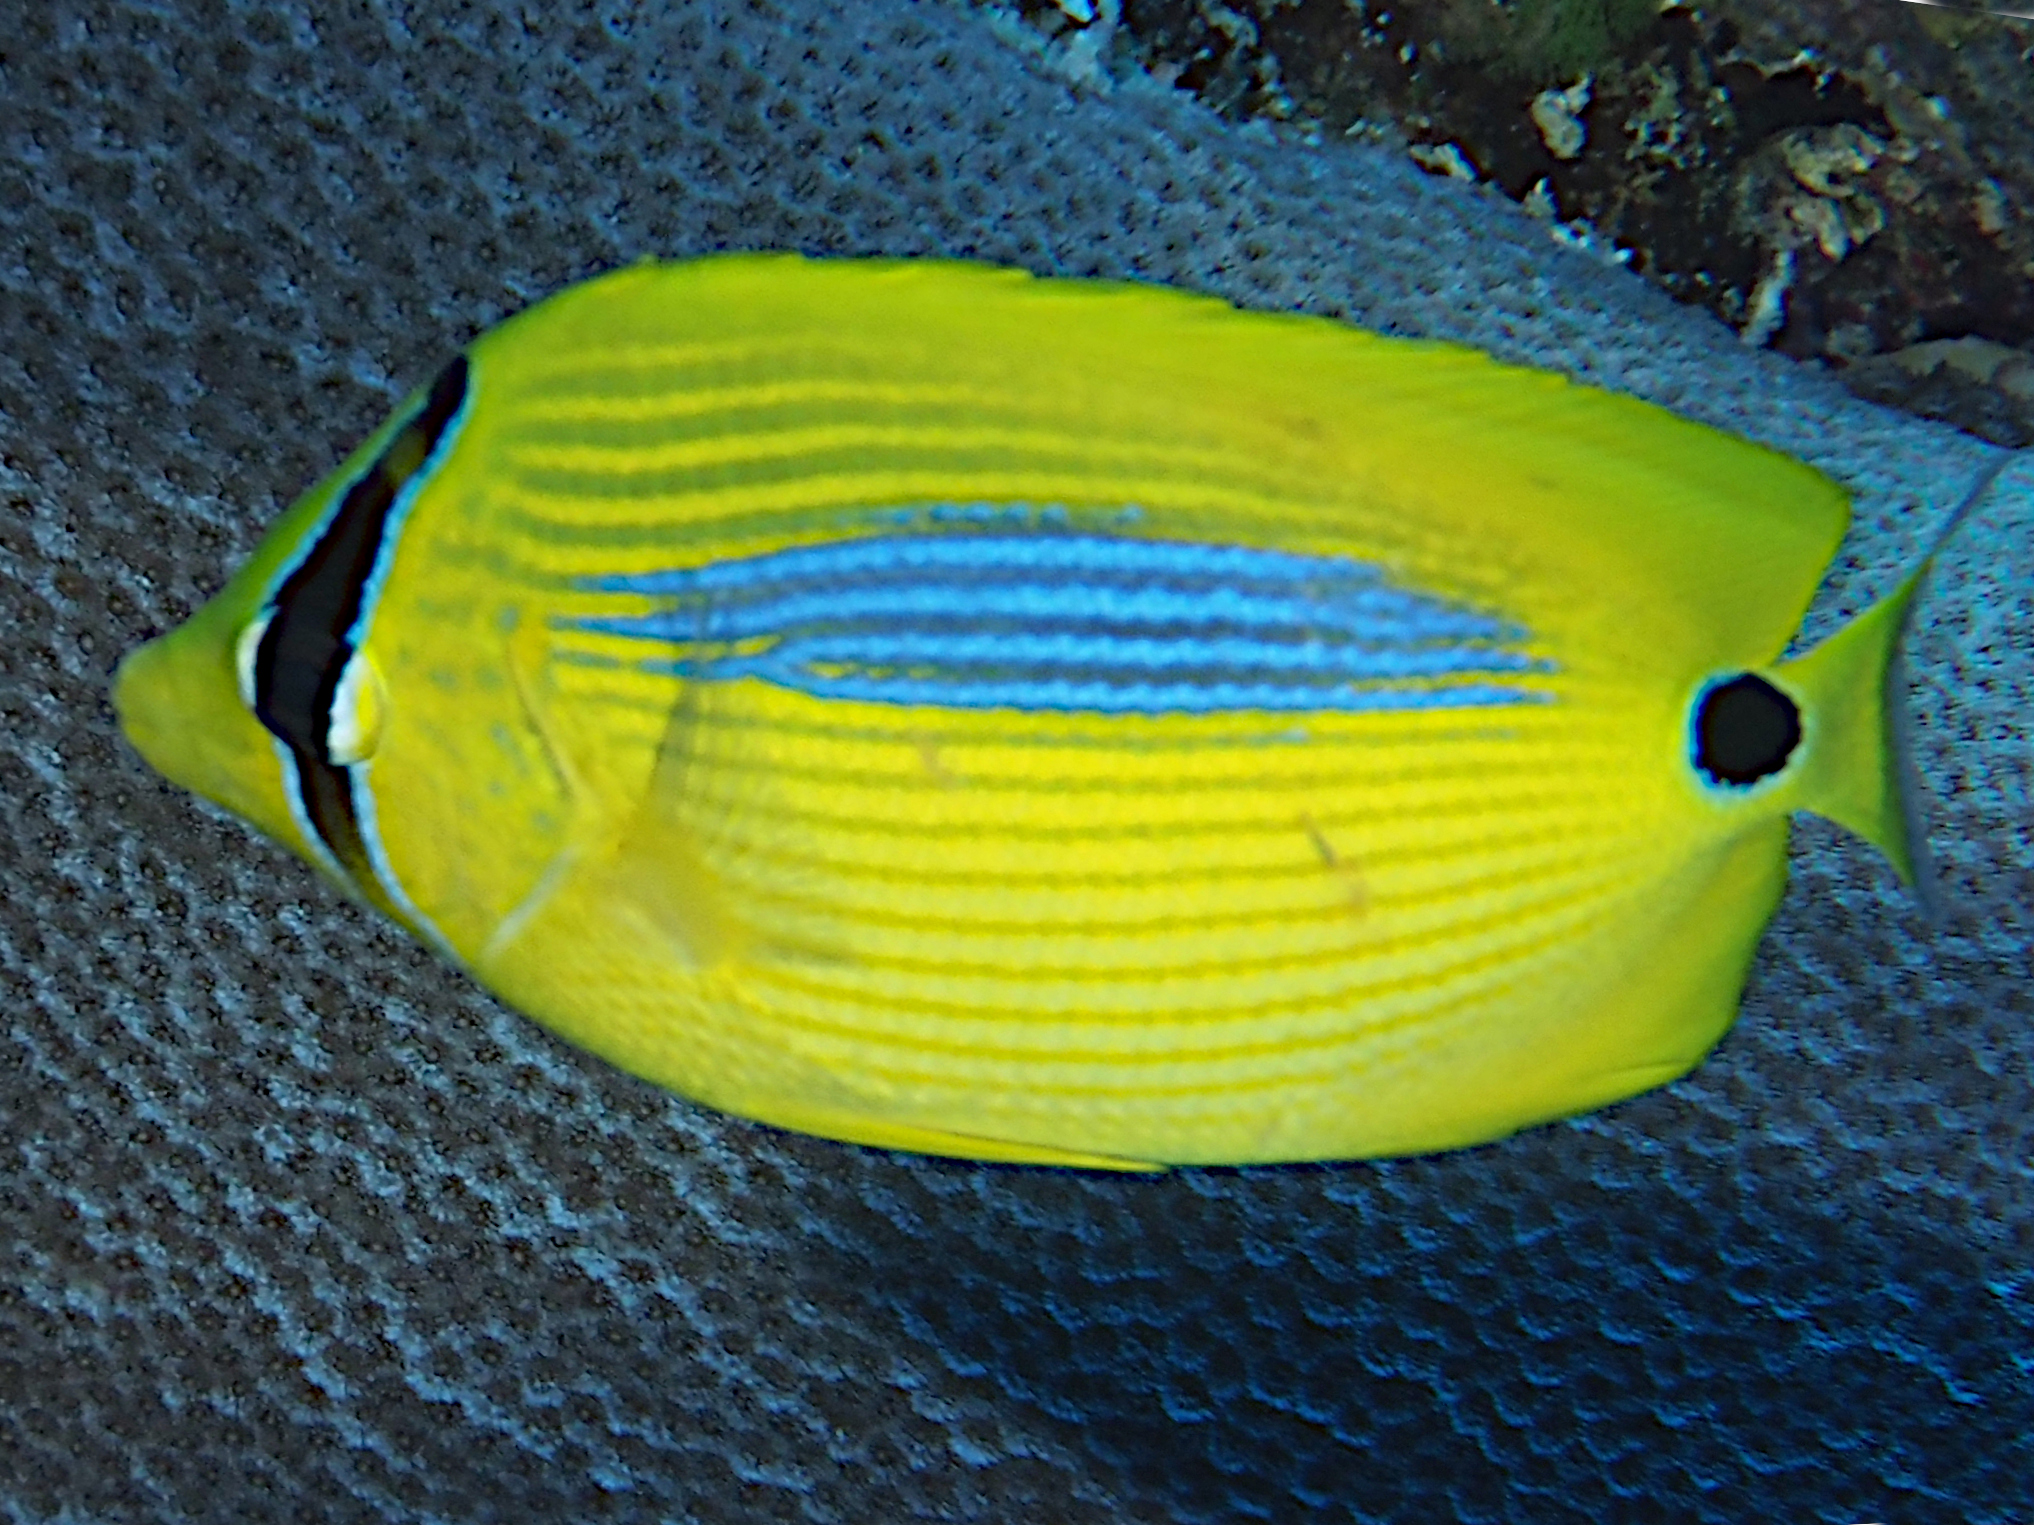 Blue-Spot Butterflyfish - Chaetodon plebeius